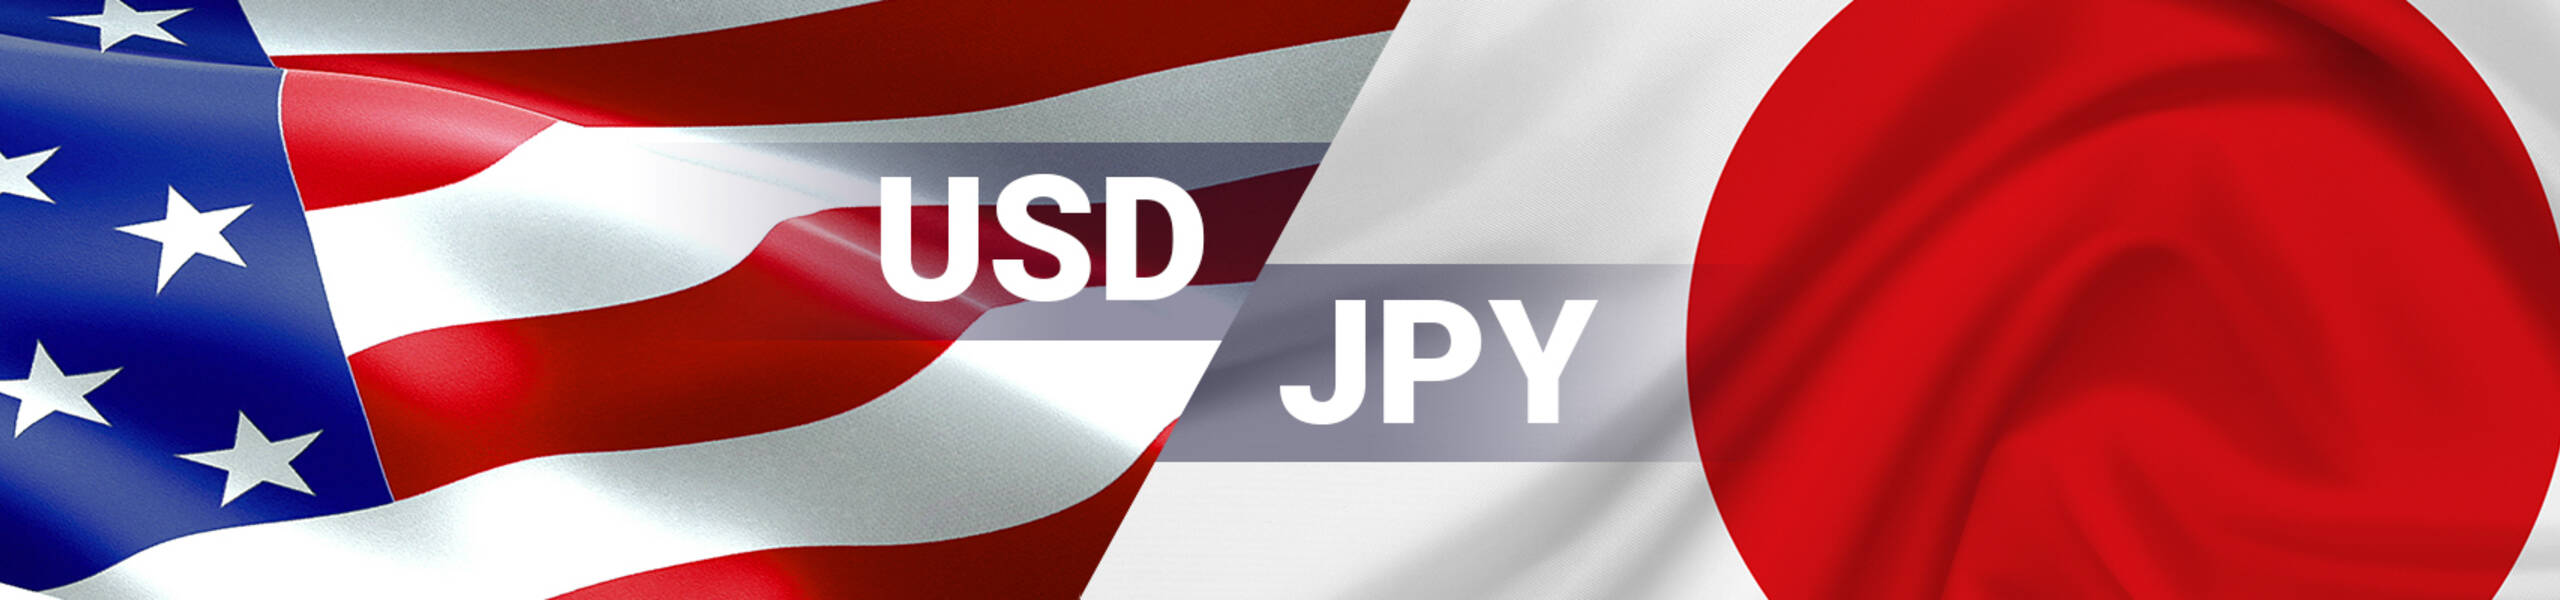 USD/JPY: Dollar rising to Cloud